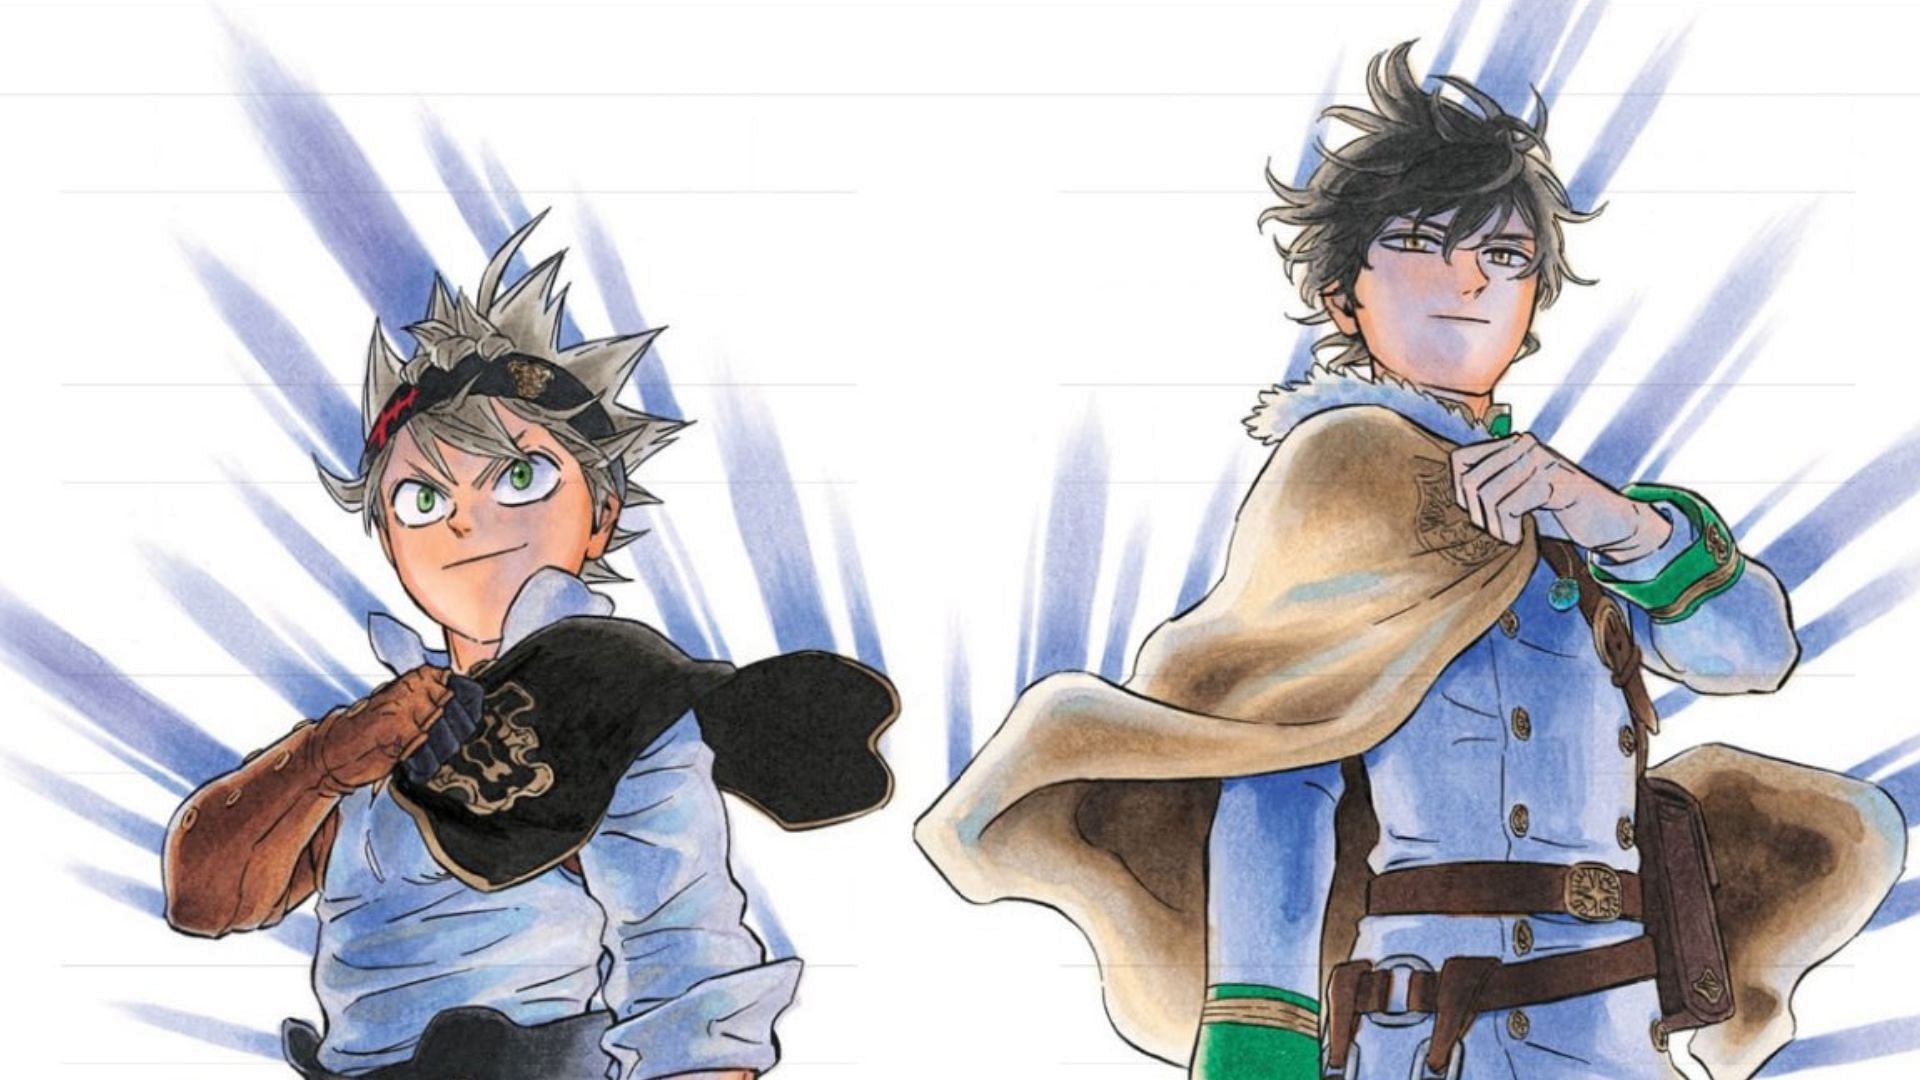 Asta and Yuno as seen in the manga (Image via Shueisha)